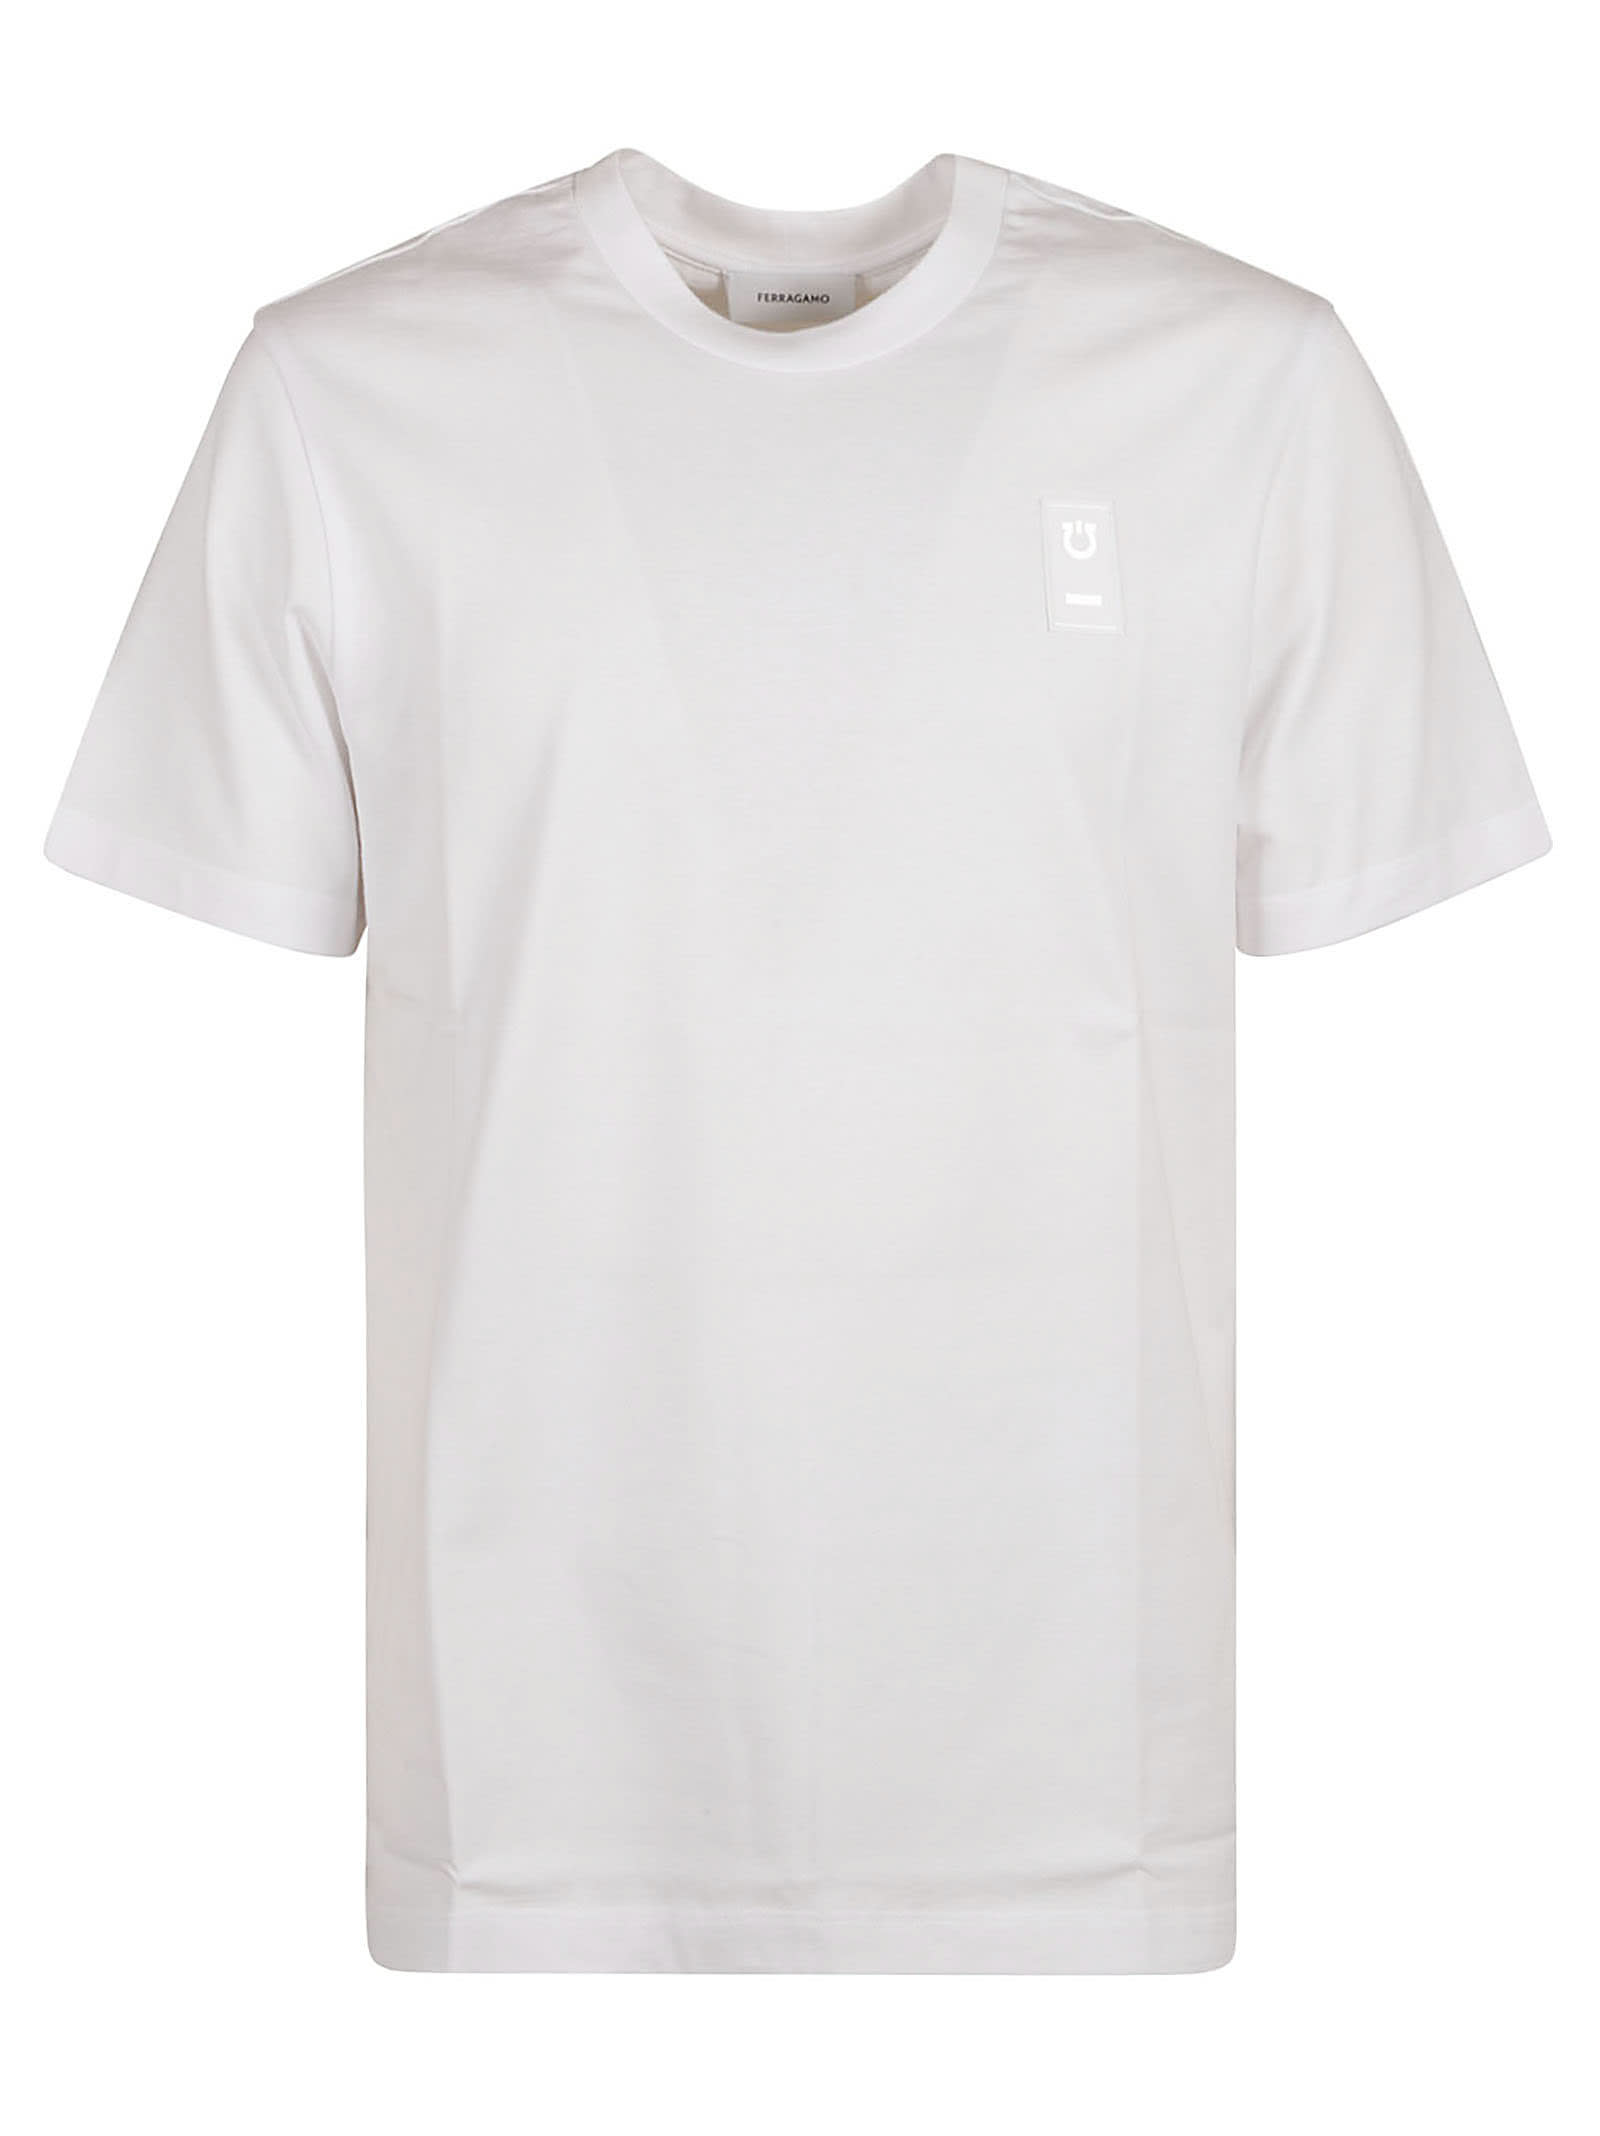 Ferragamo Logo Patch T-shirt In White/black